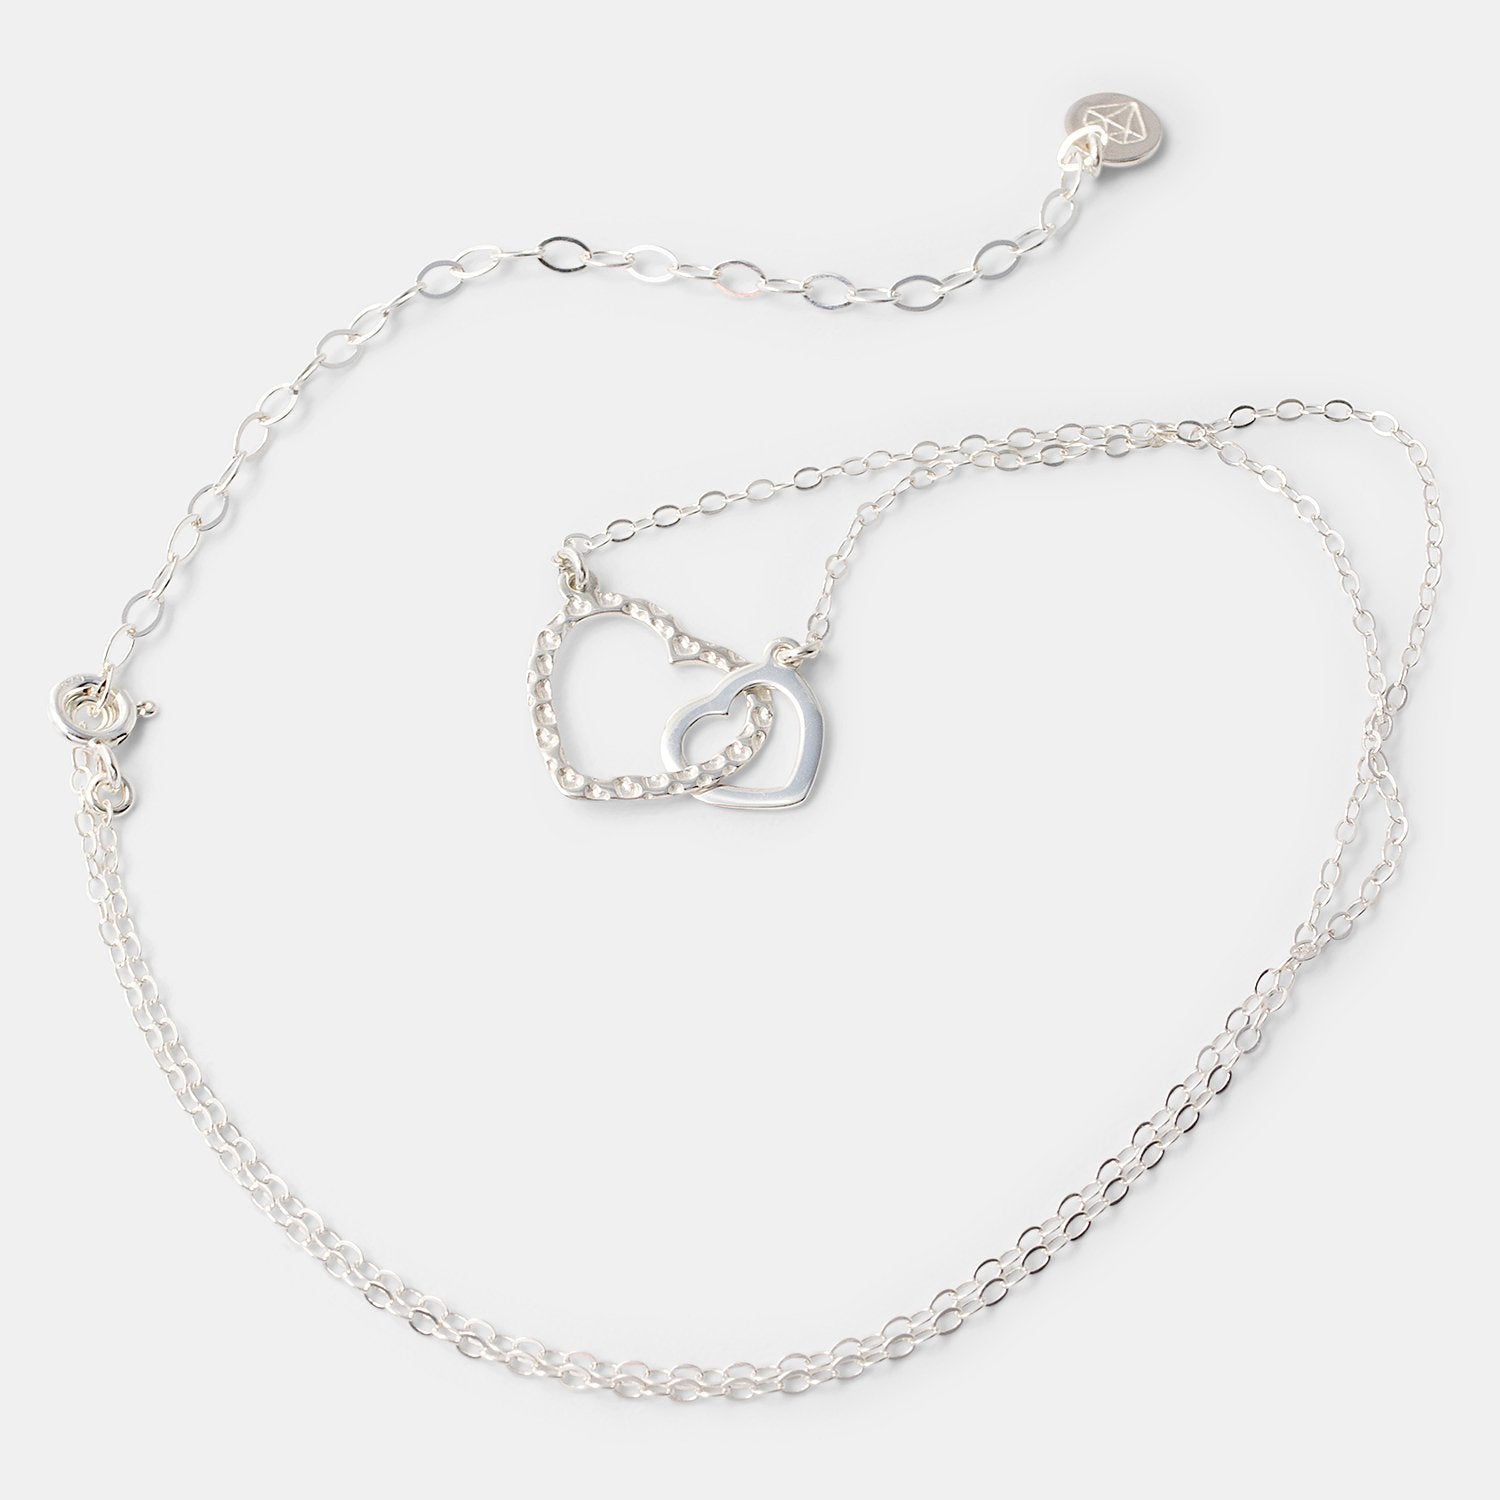 Linked hearts necklace - Simone Walsh Jewellery Australia